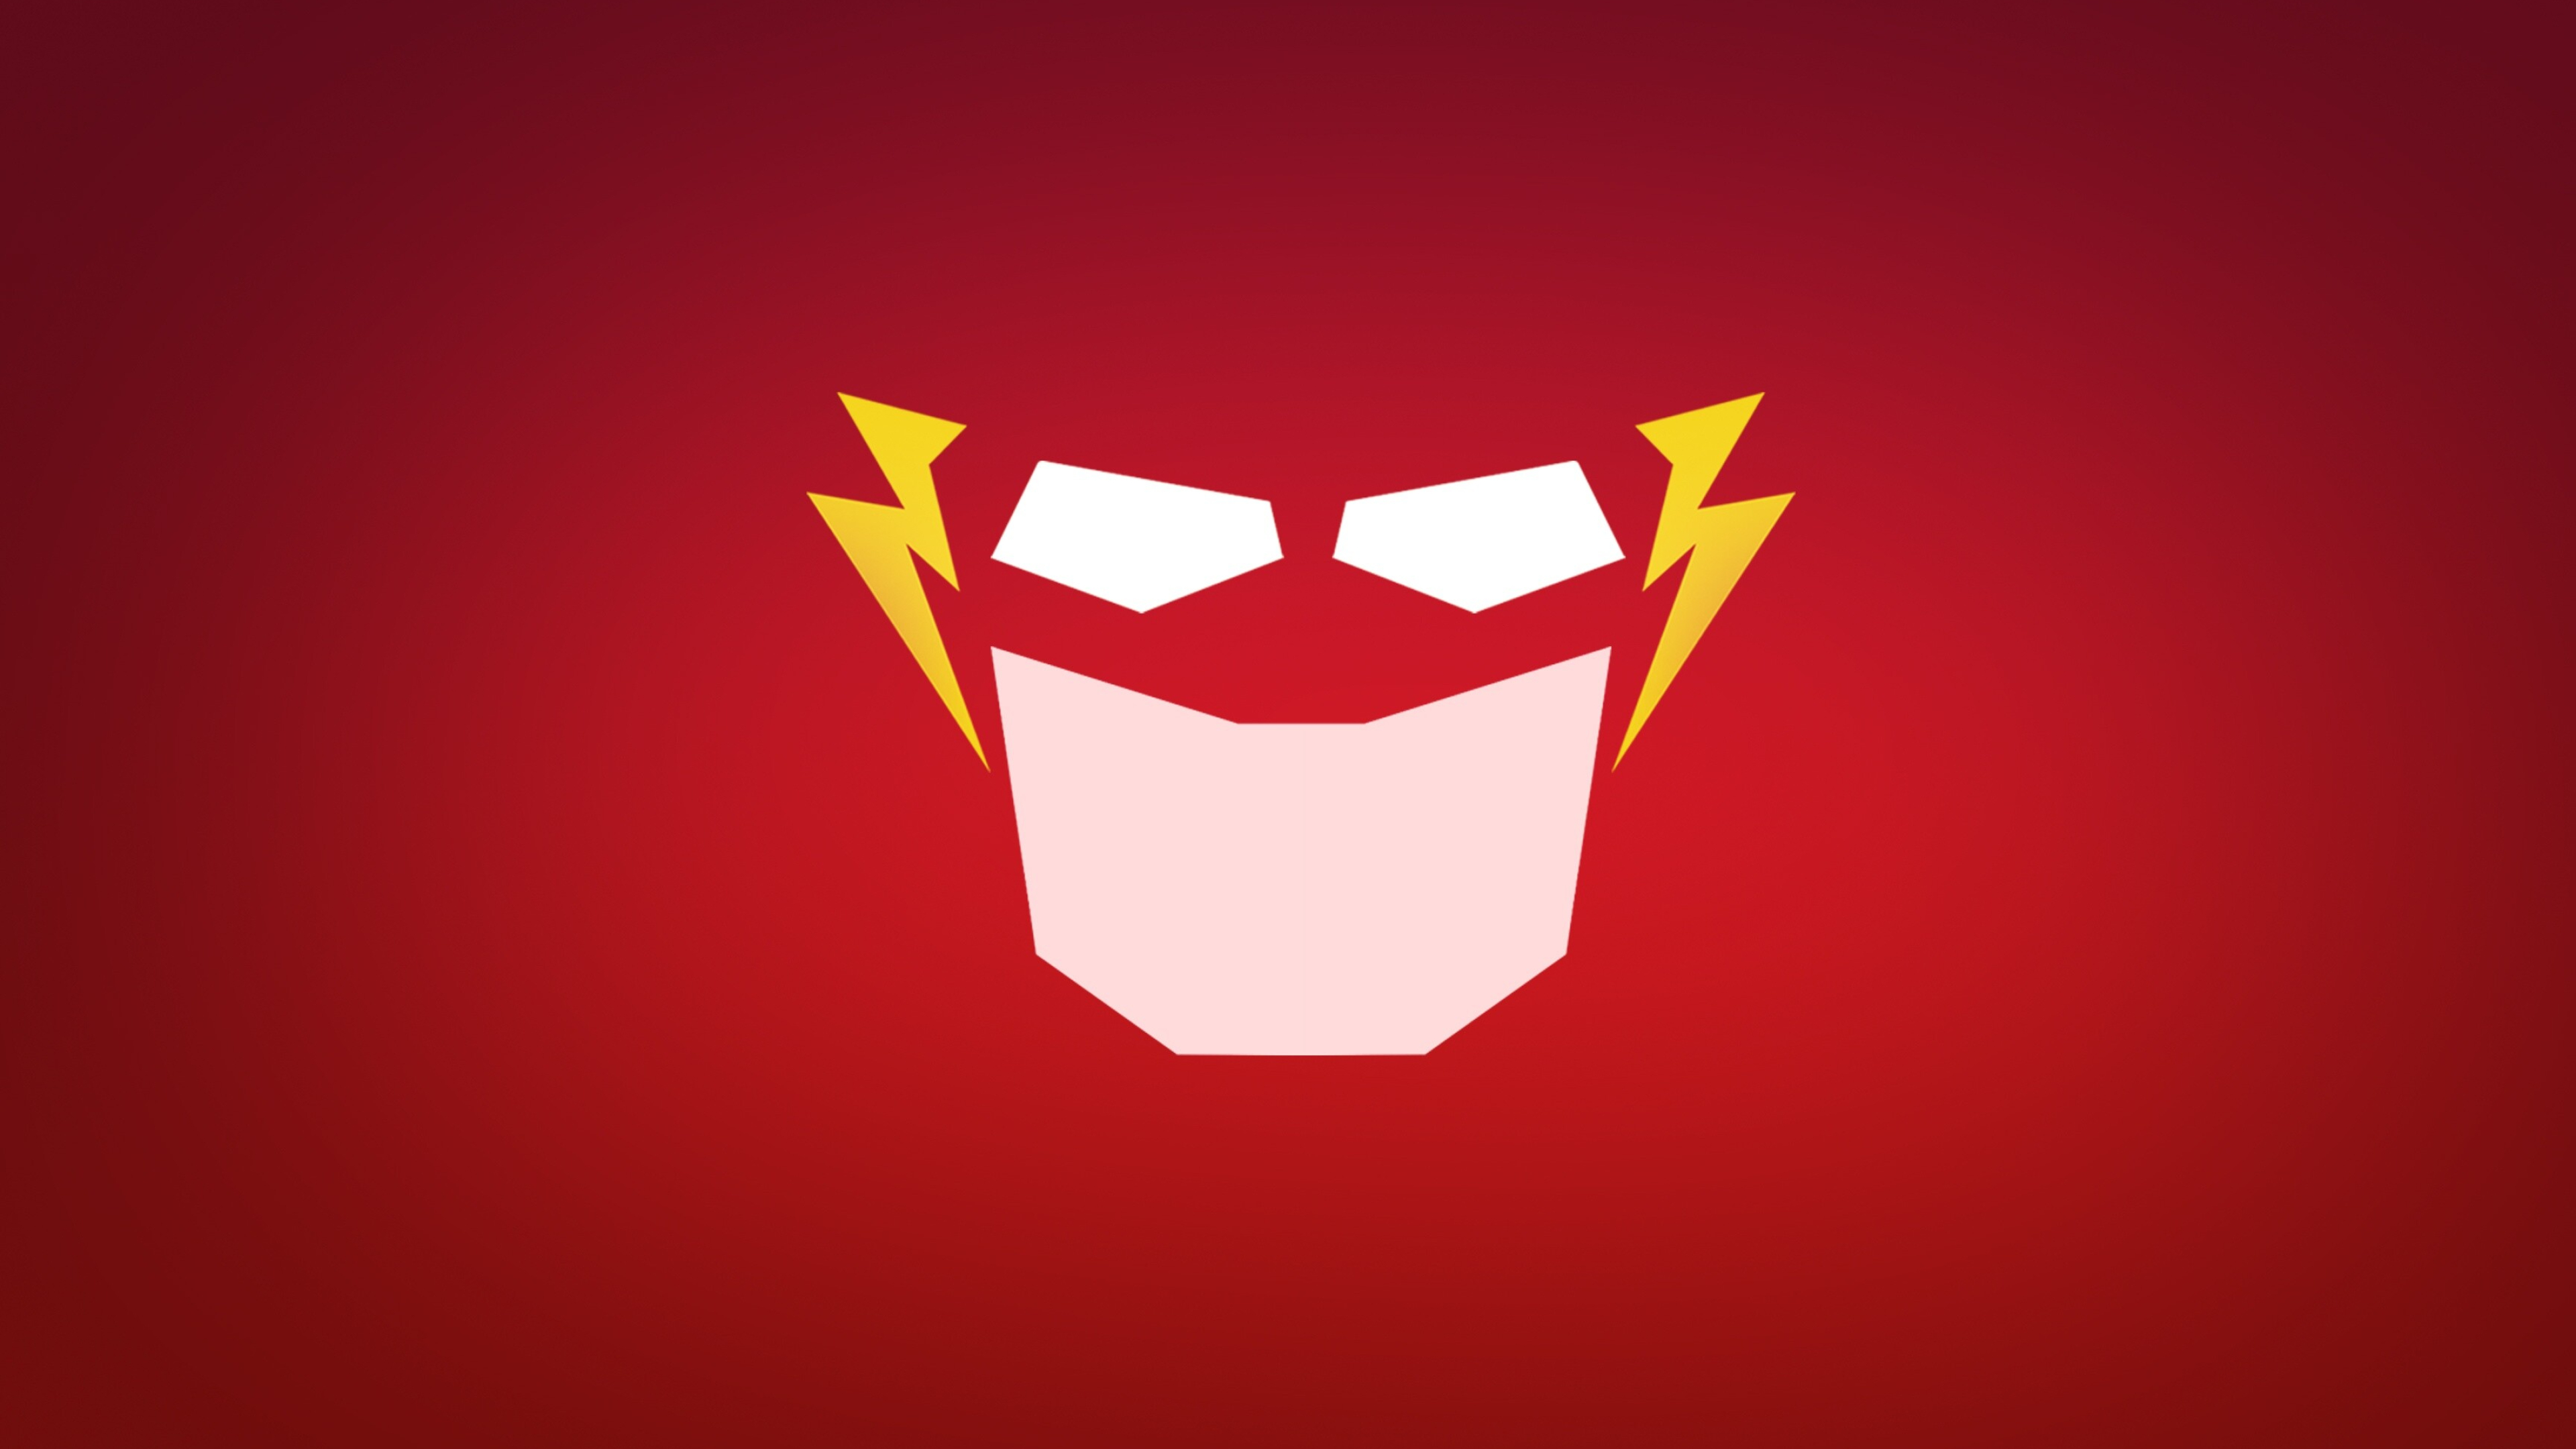 Flash (DC): An American comic book, Fictional character, Minimalistic. 3840x2160 4K Wallpaper.